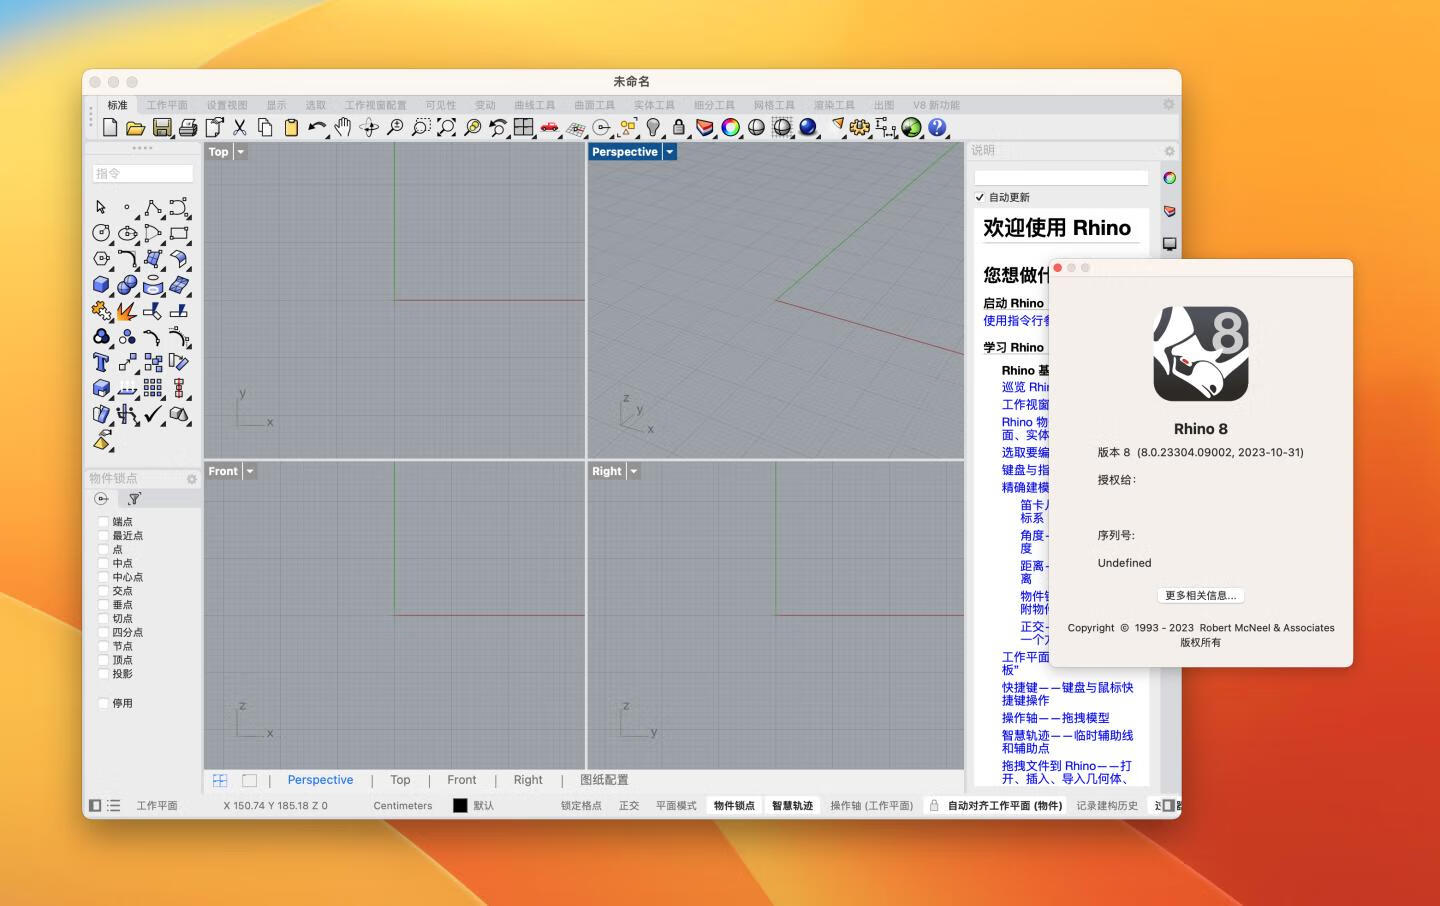 🦏 犀牛 Rhino 8 for Mac v8.0.23304.09002 中文破解版-功能齐全的三维建模软件